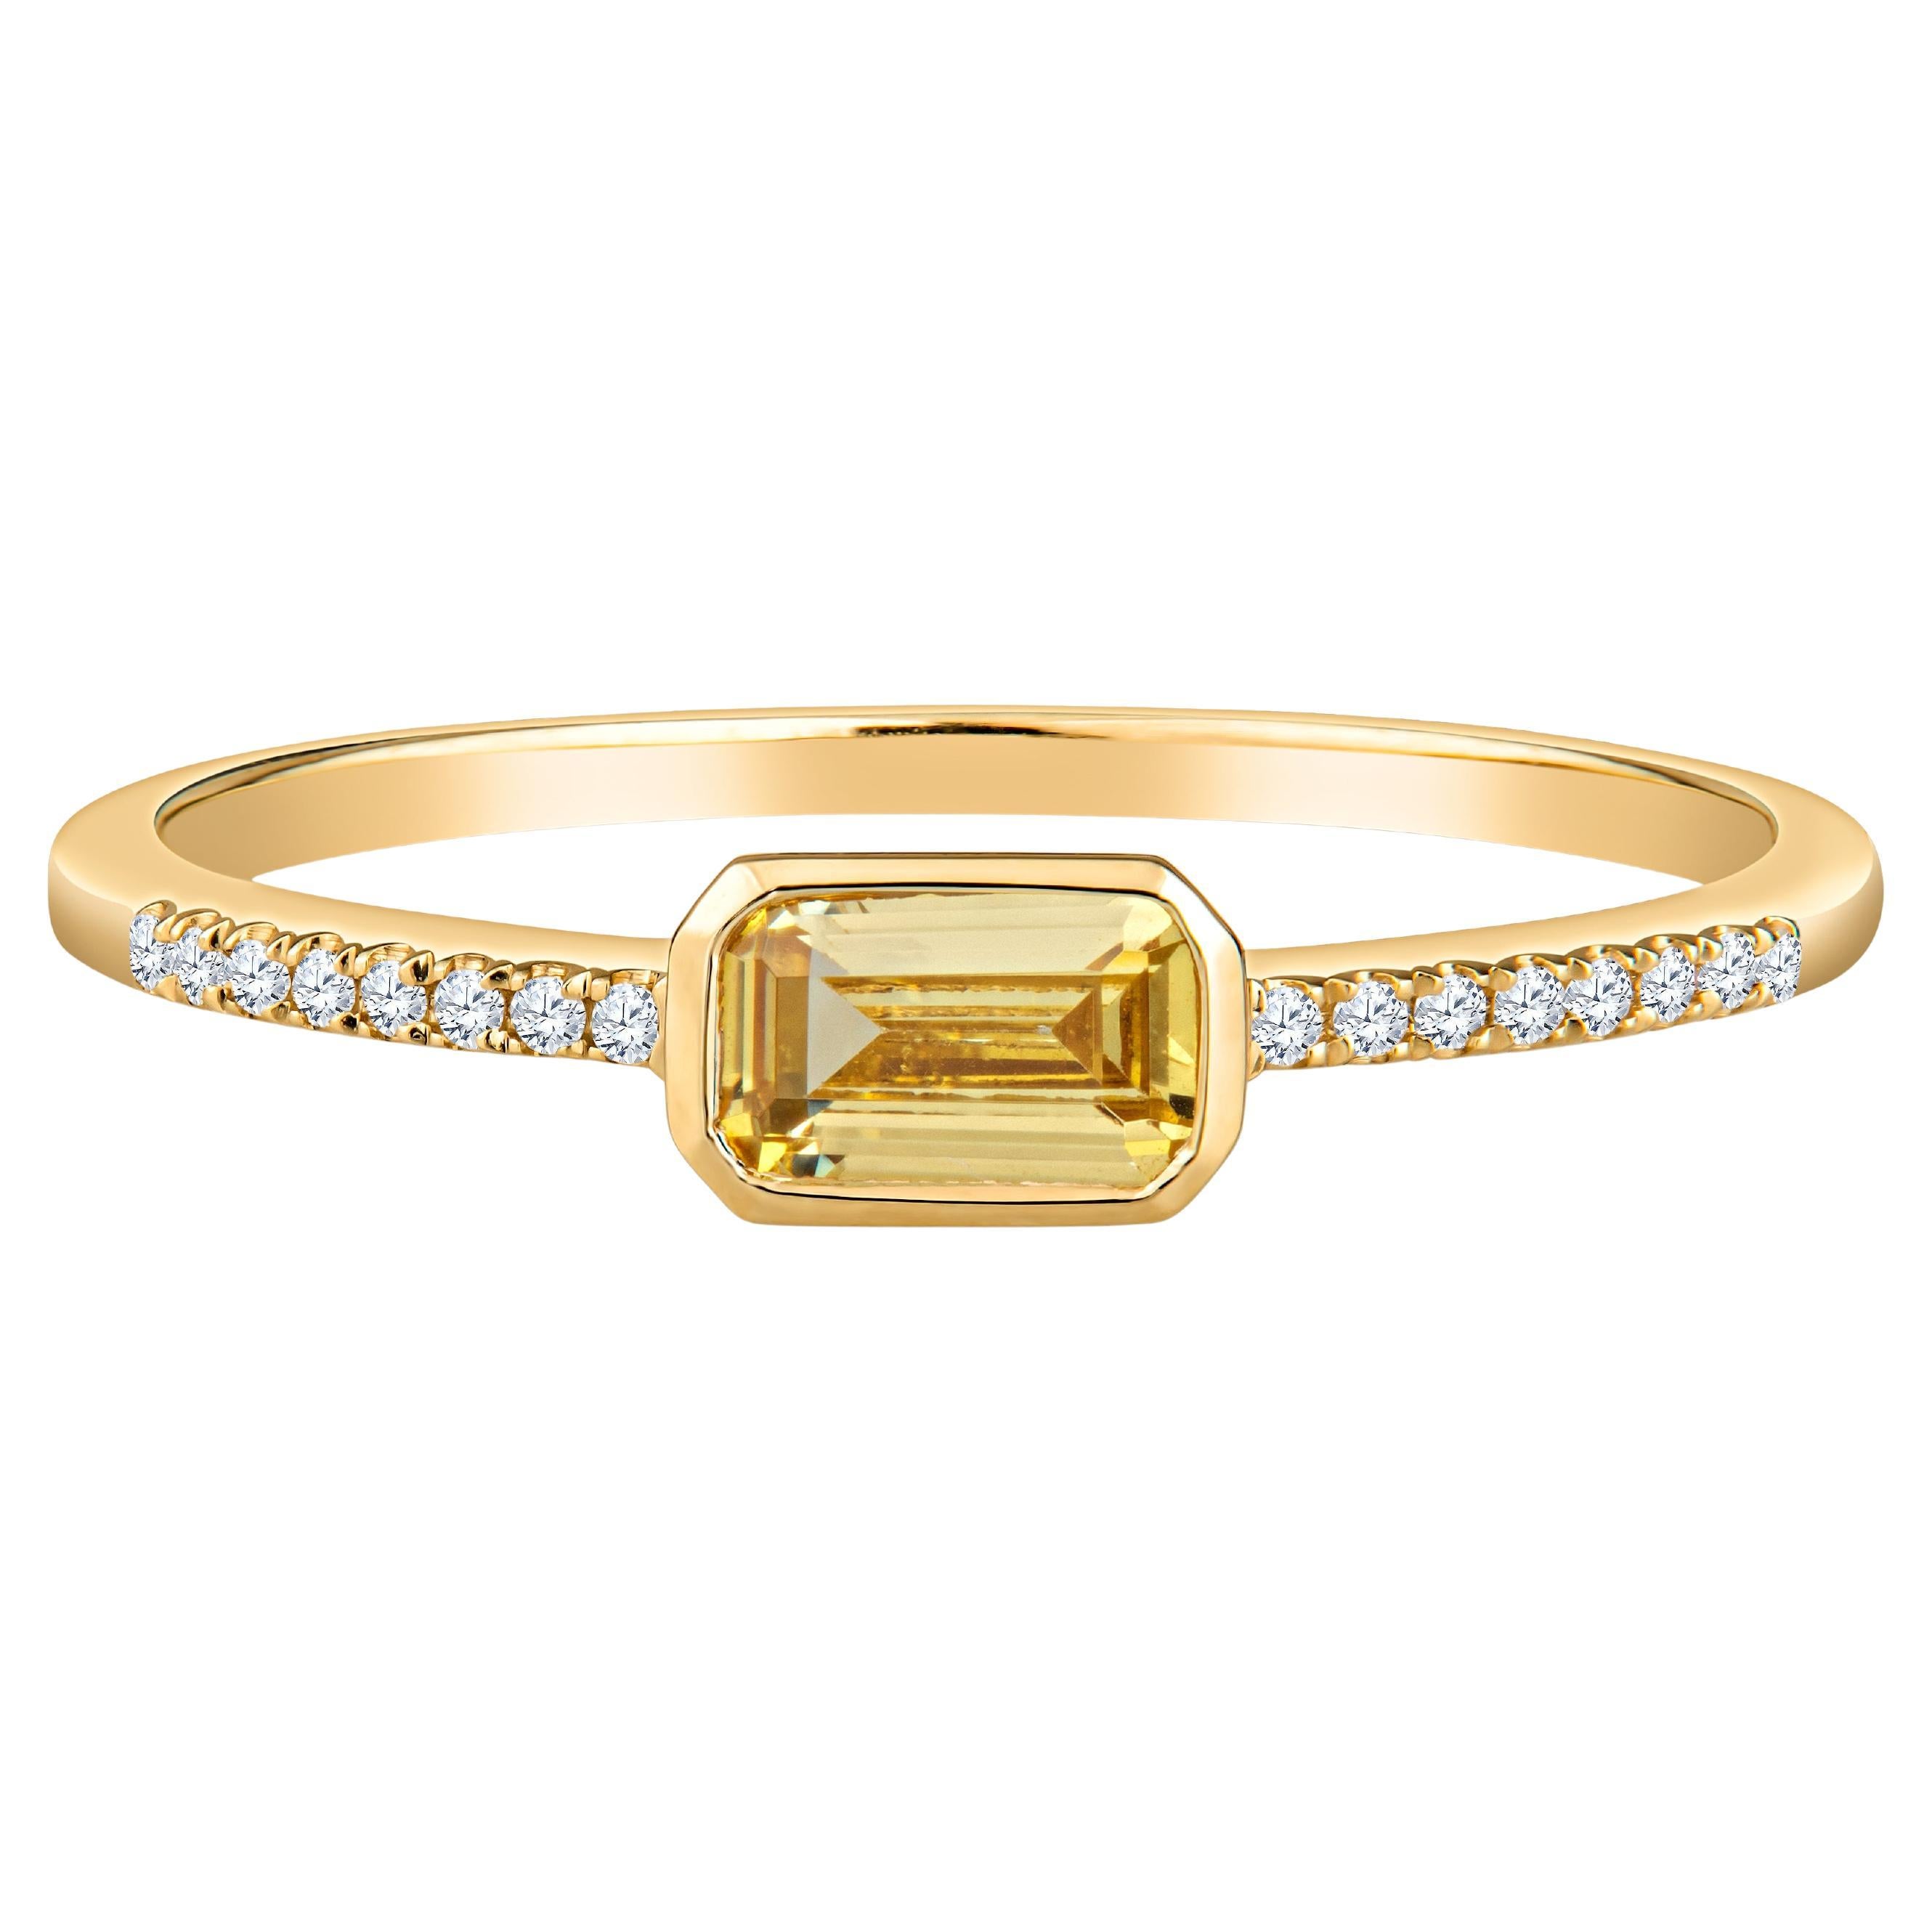 Emerald Cut Citrine and Diamond 14 Karat Yellow Gold Fashion Ring 